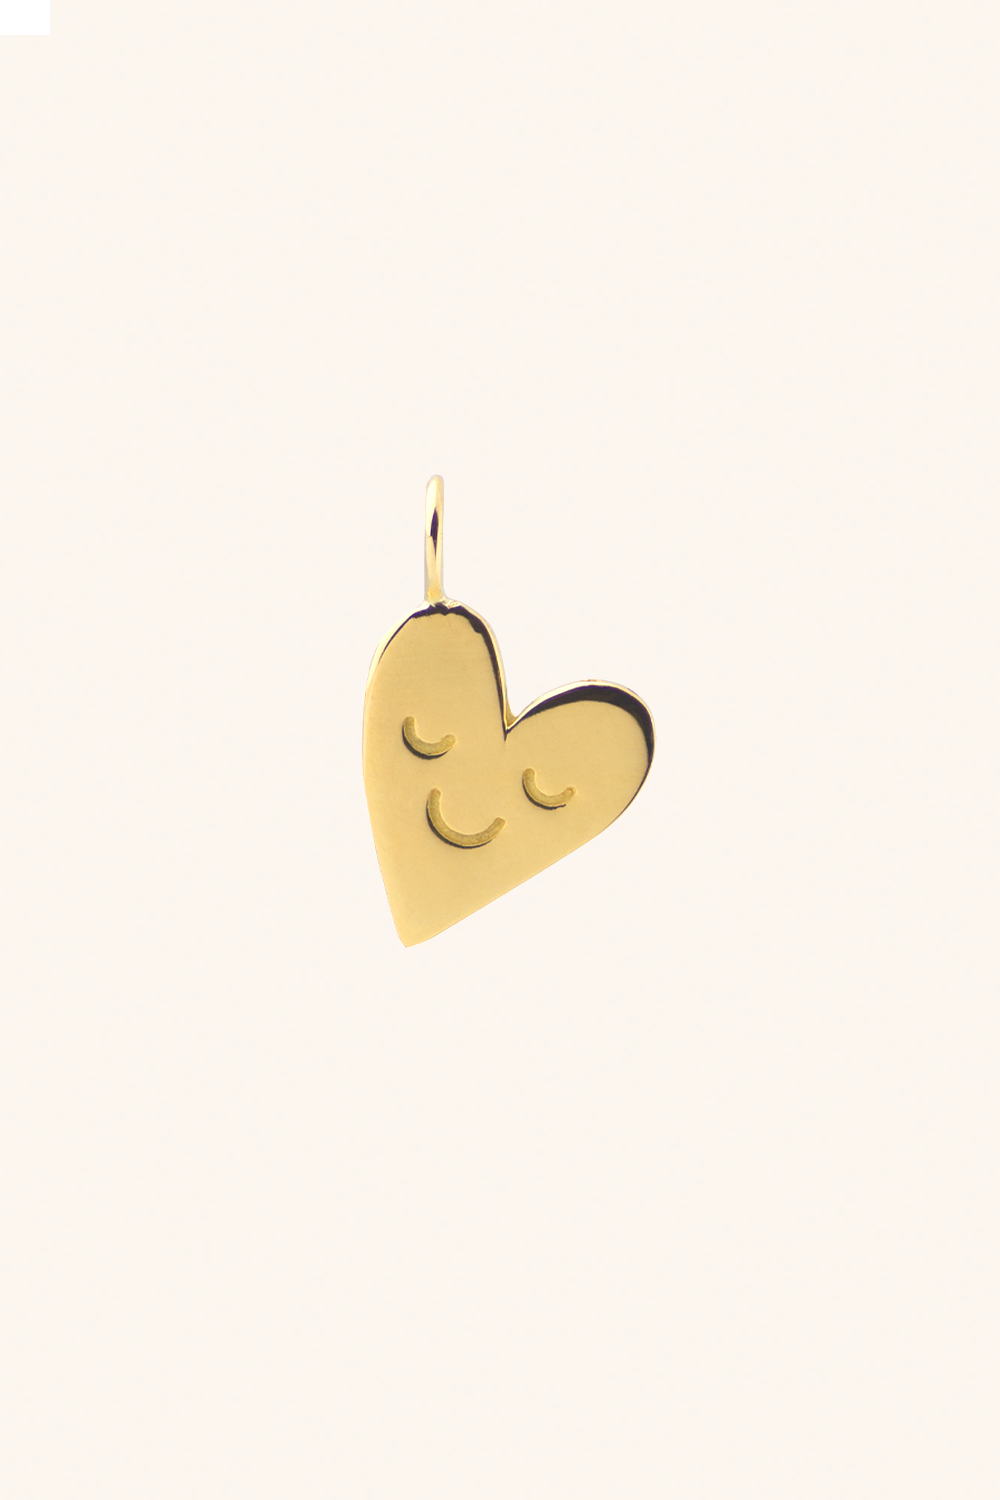 The Fine Gold Mood Heart Charm 